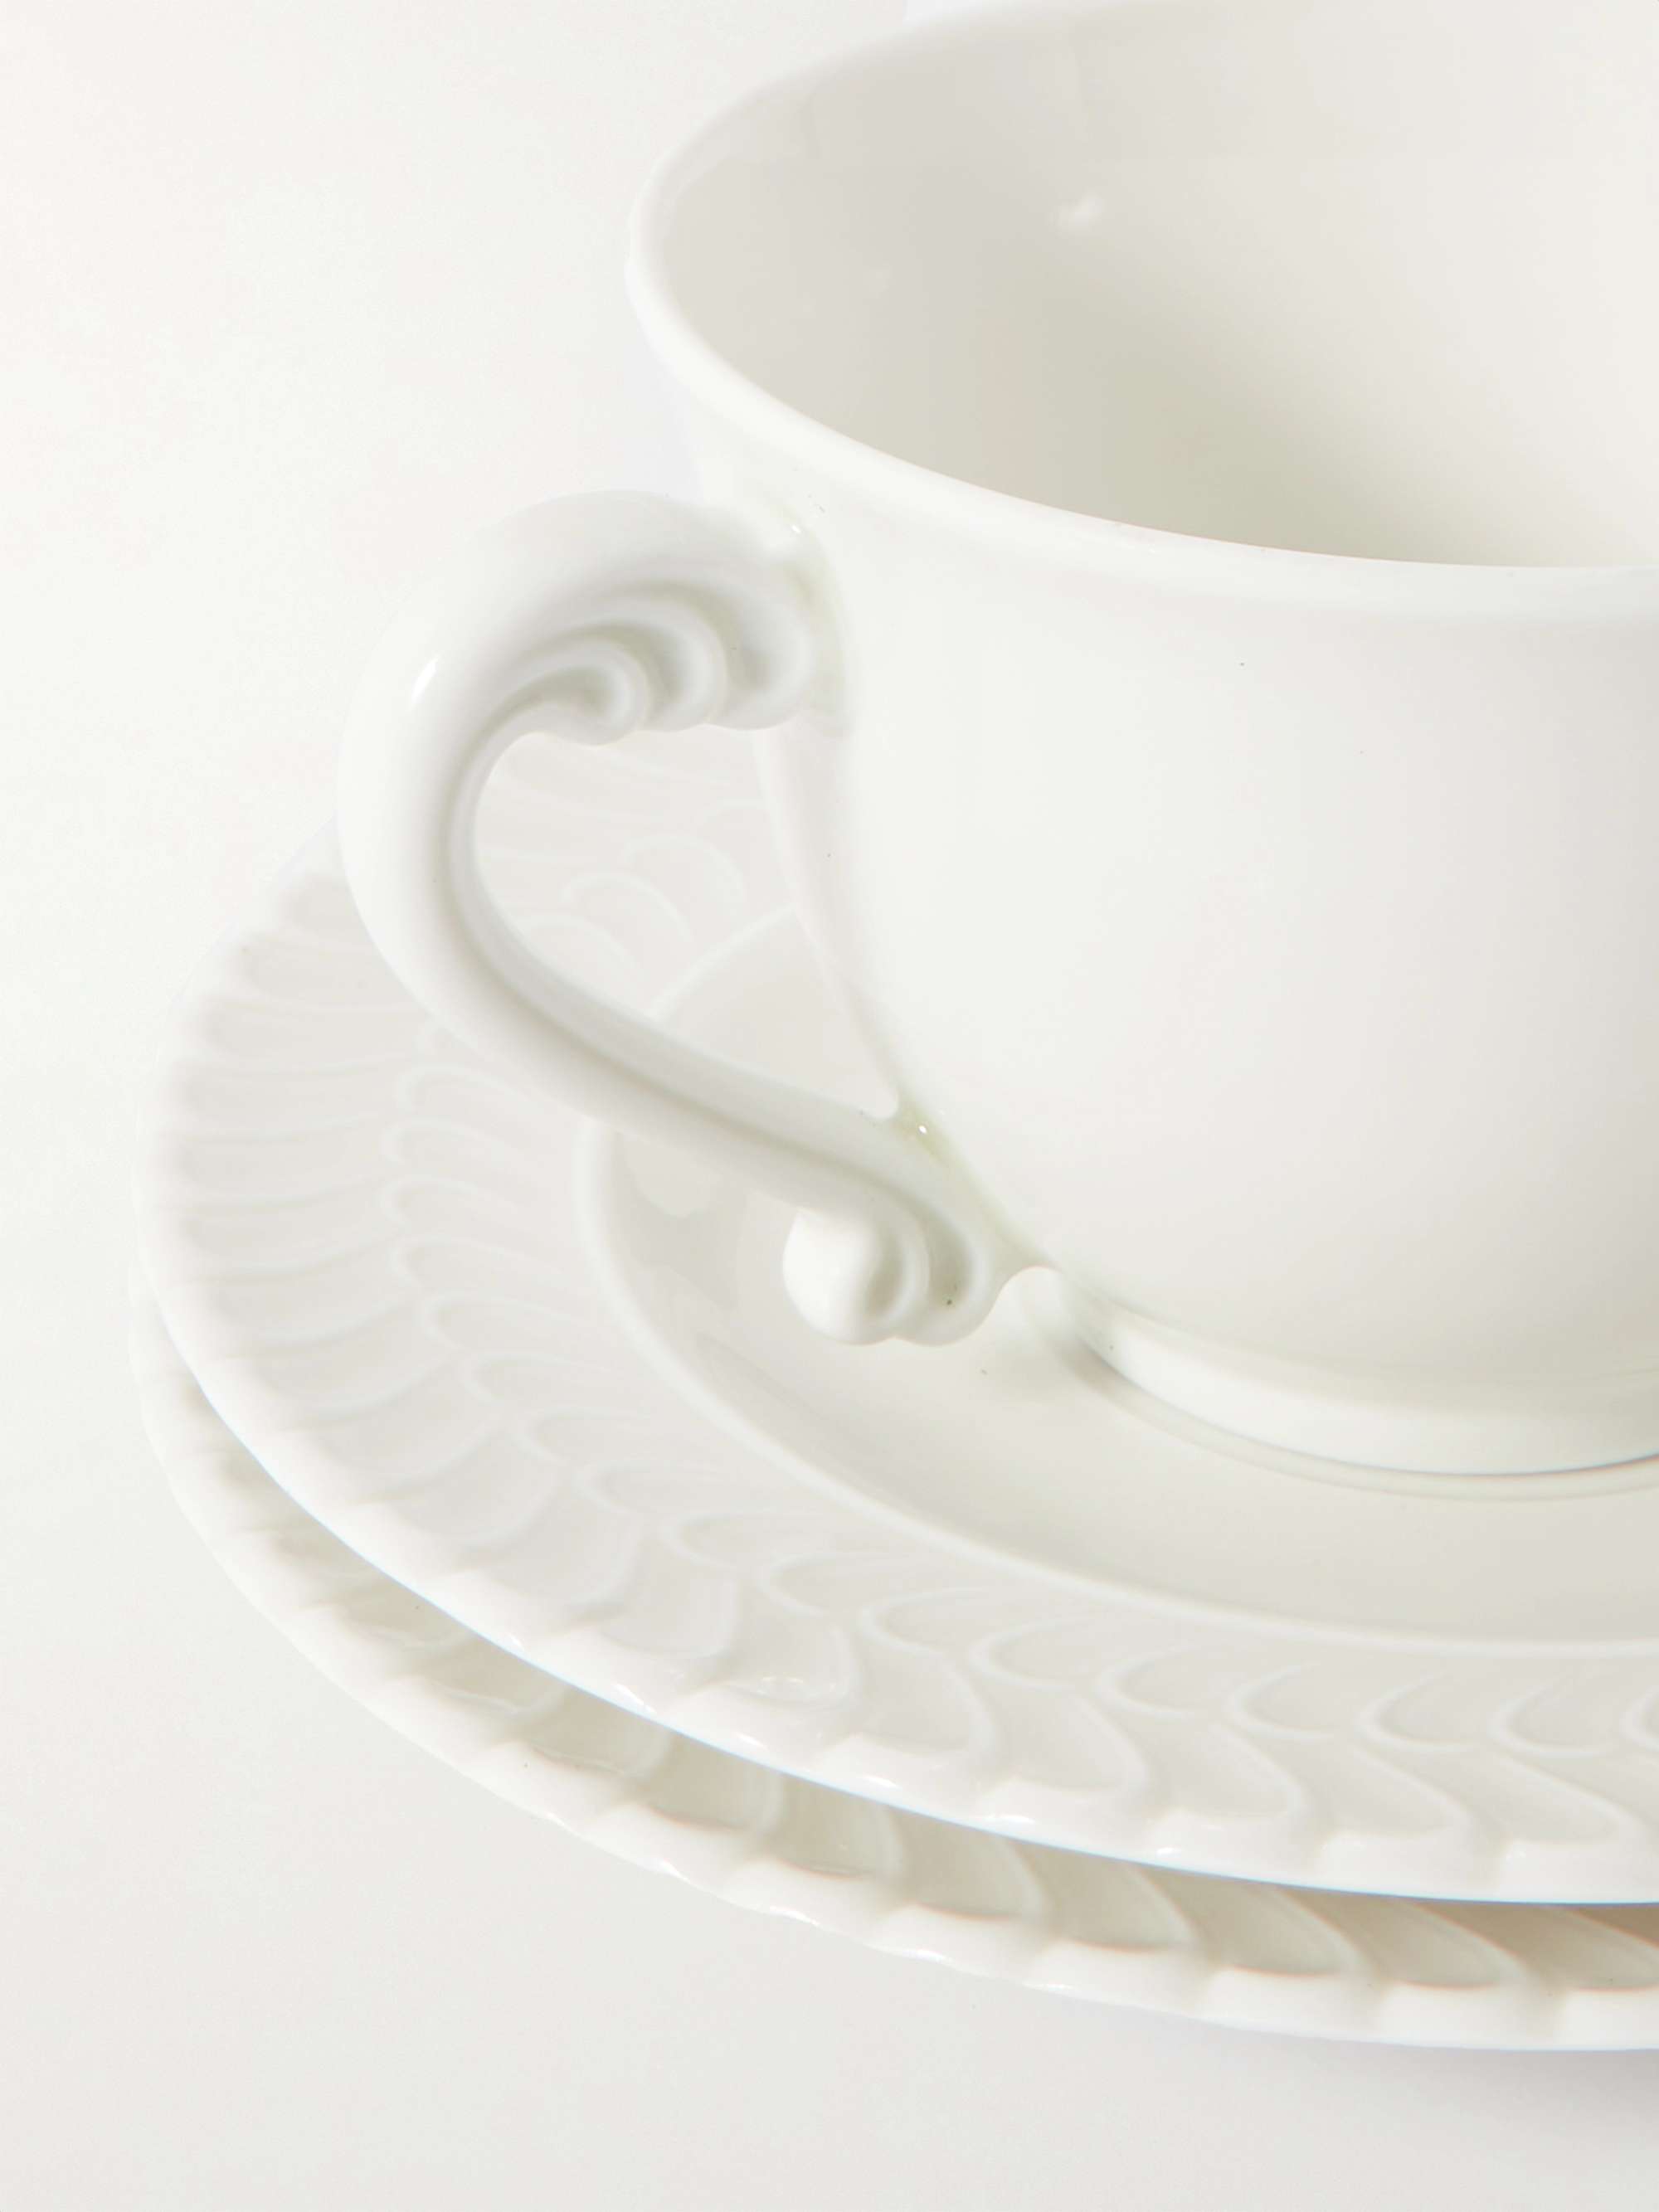 BUCCELLATI + Ginori Set of Two Porcelain Tea Cups and Saucers